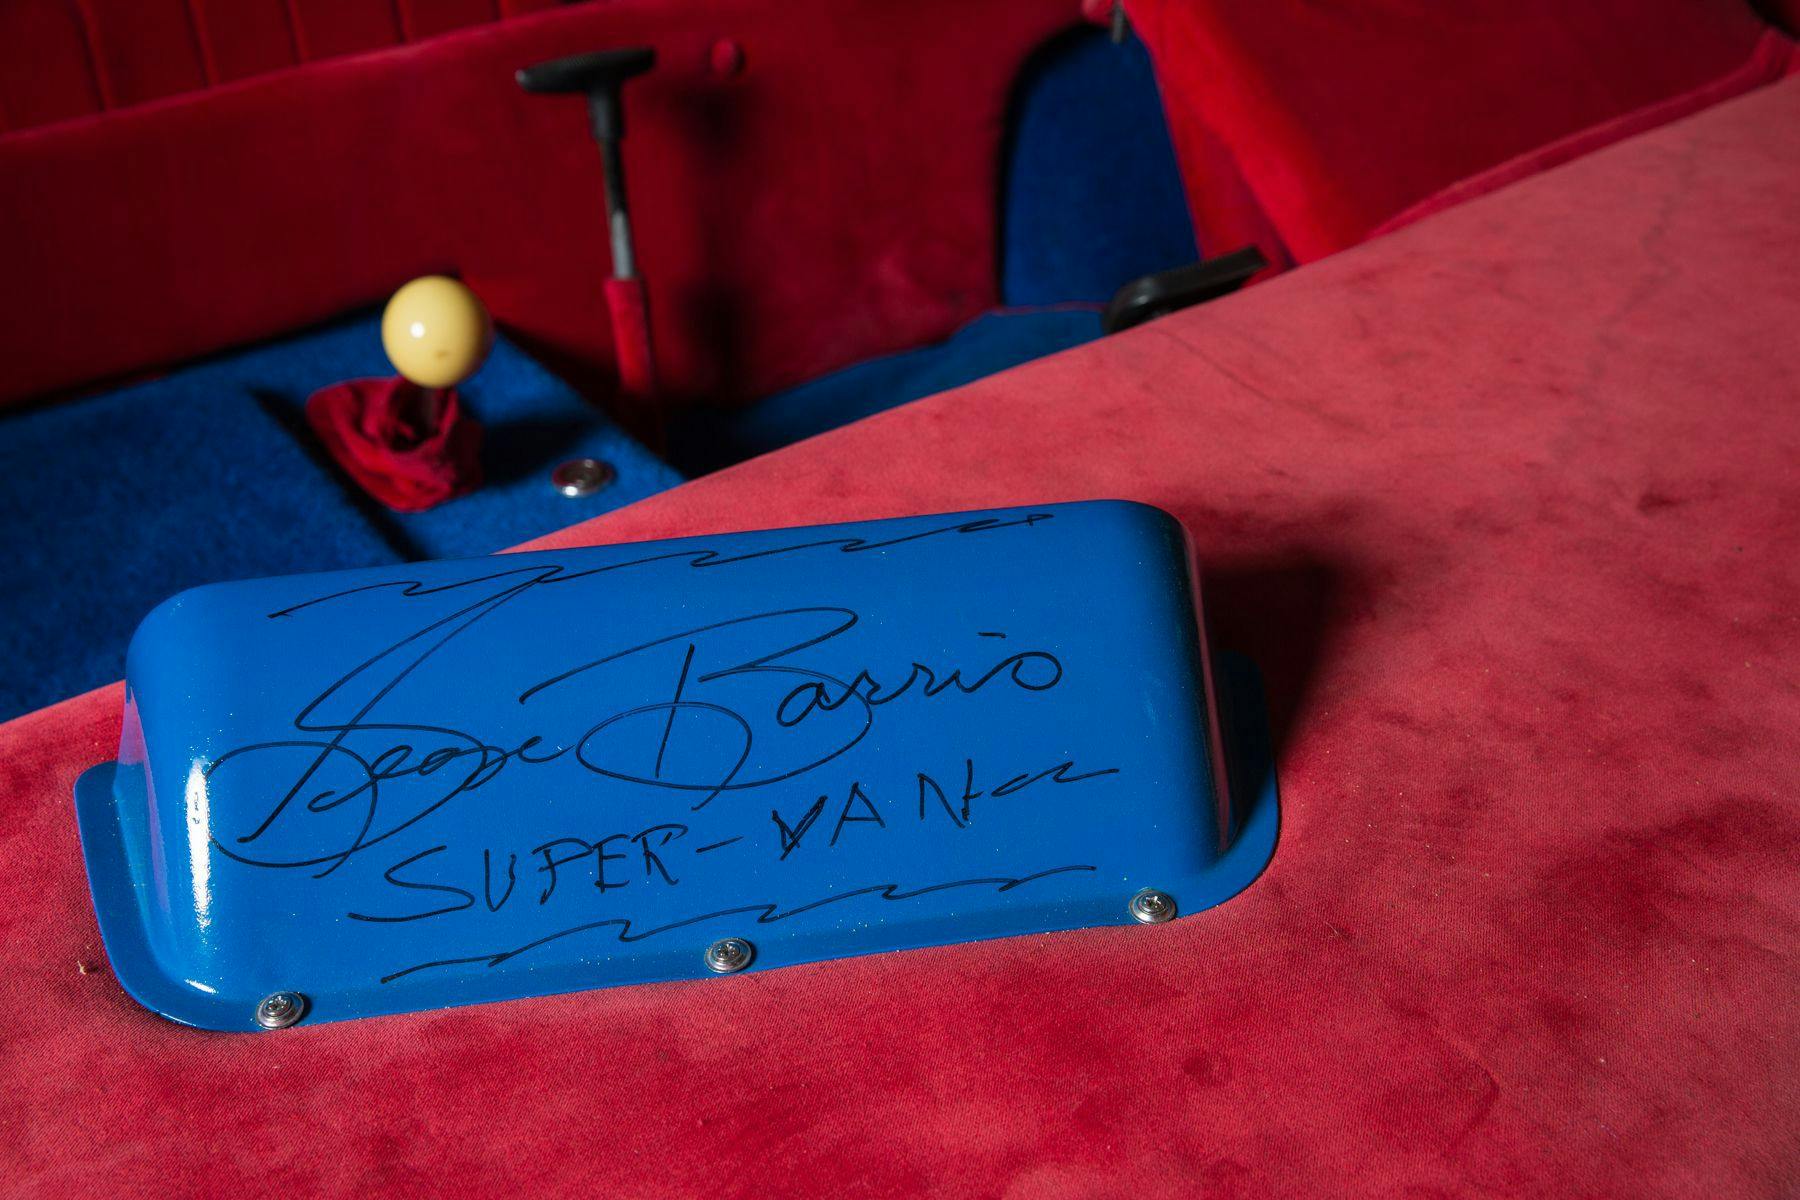 Hollywood Legends Super Van george barris signature